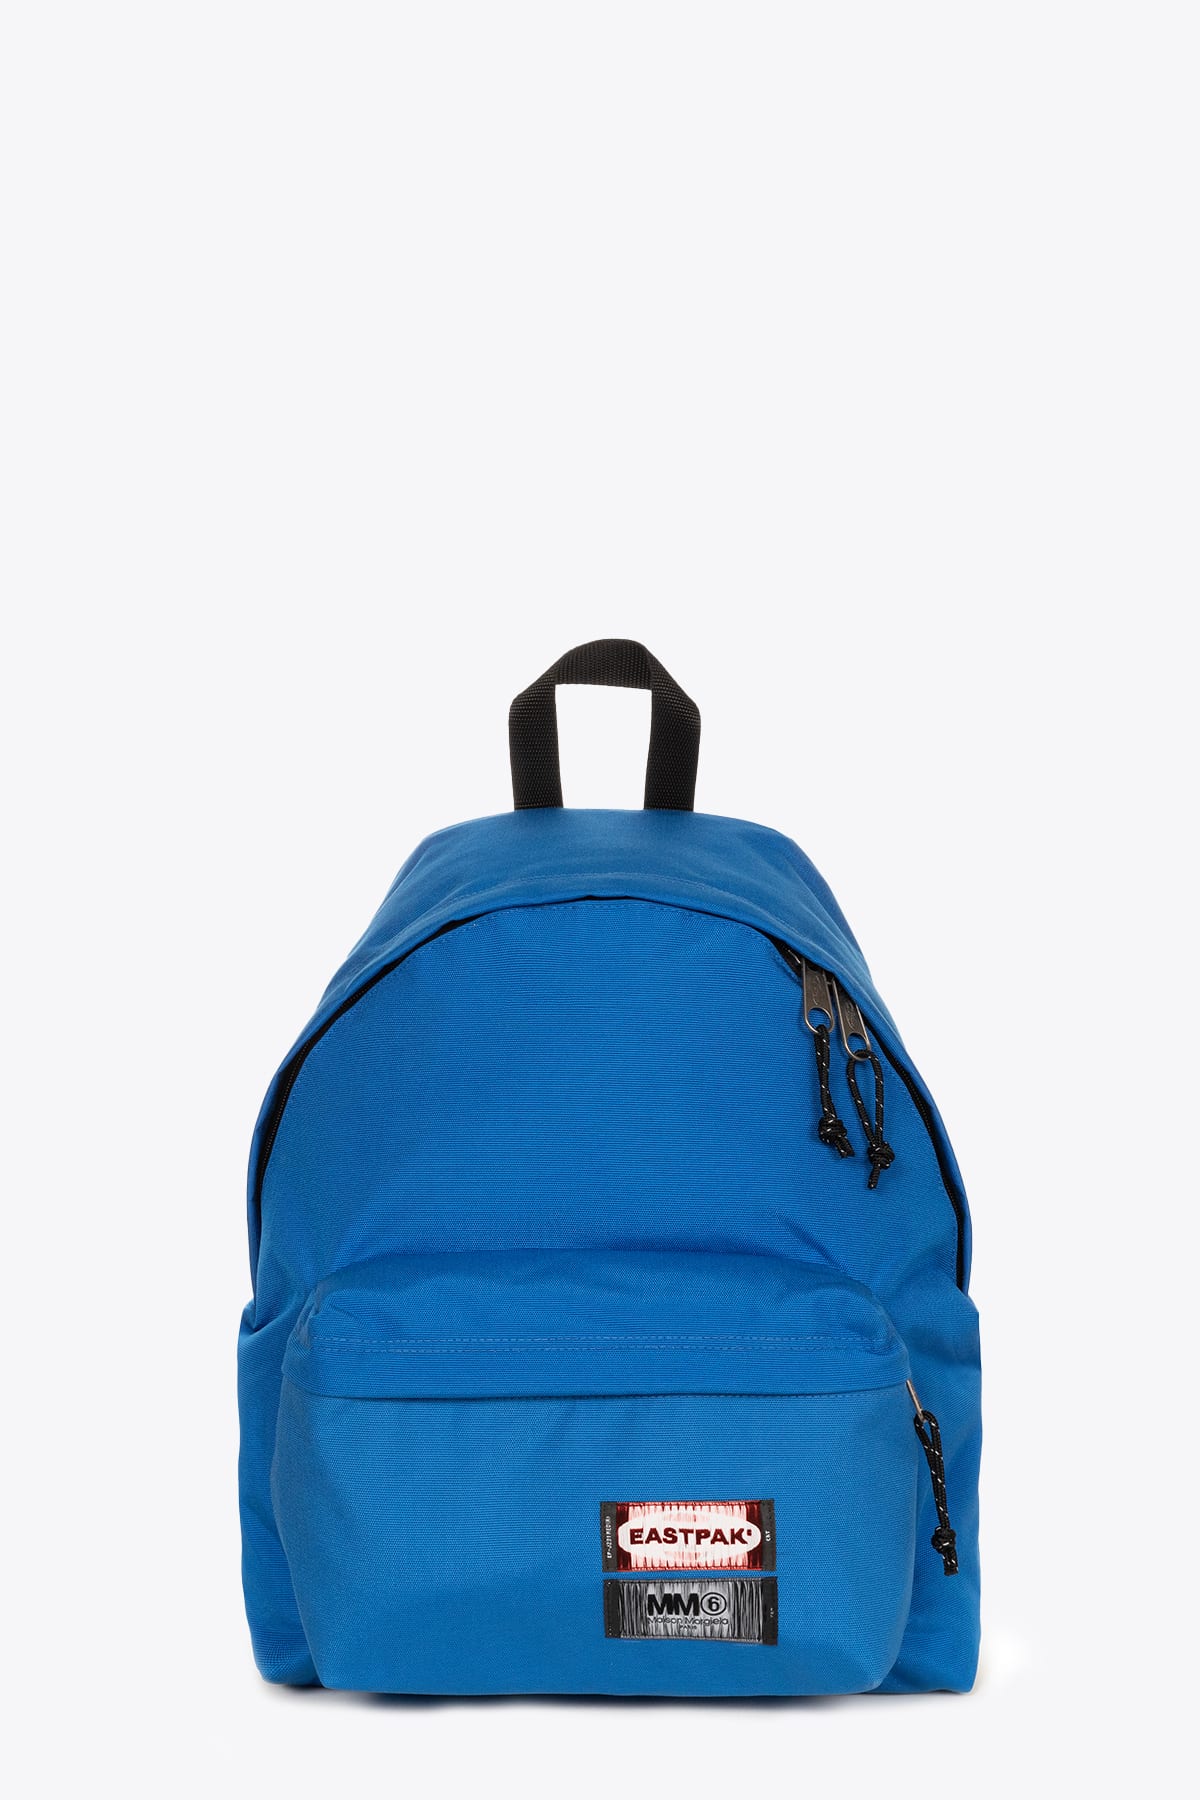 MM6 Maison Margiela Reversible Backpack Blue nylon reversible backpack Eastpak collaboration